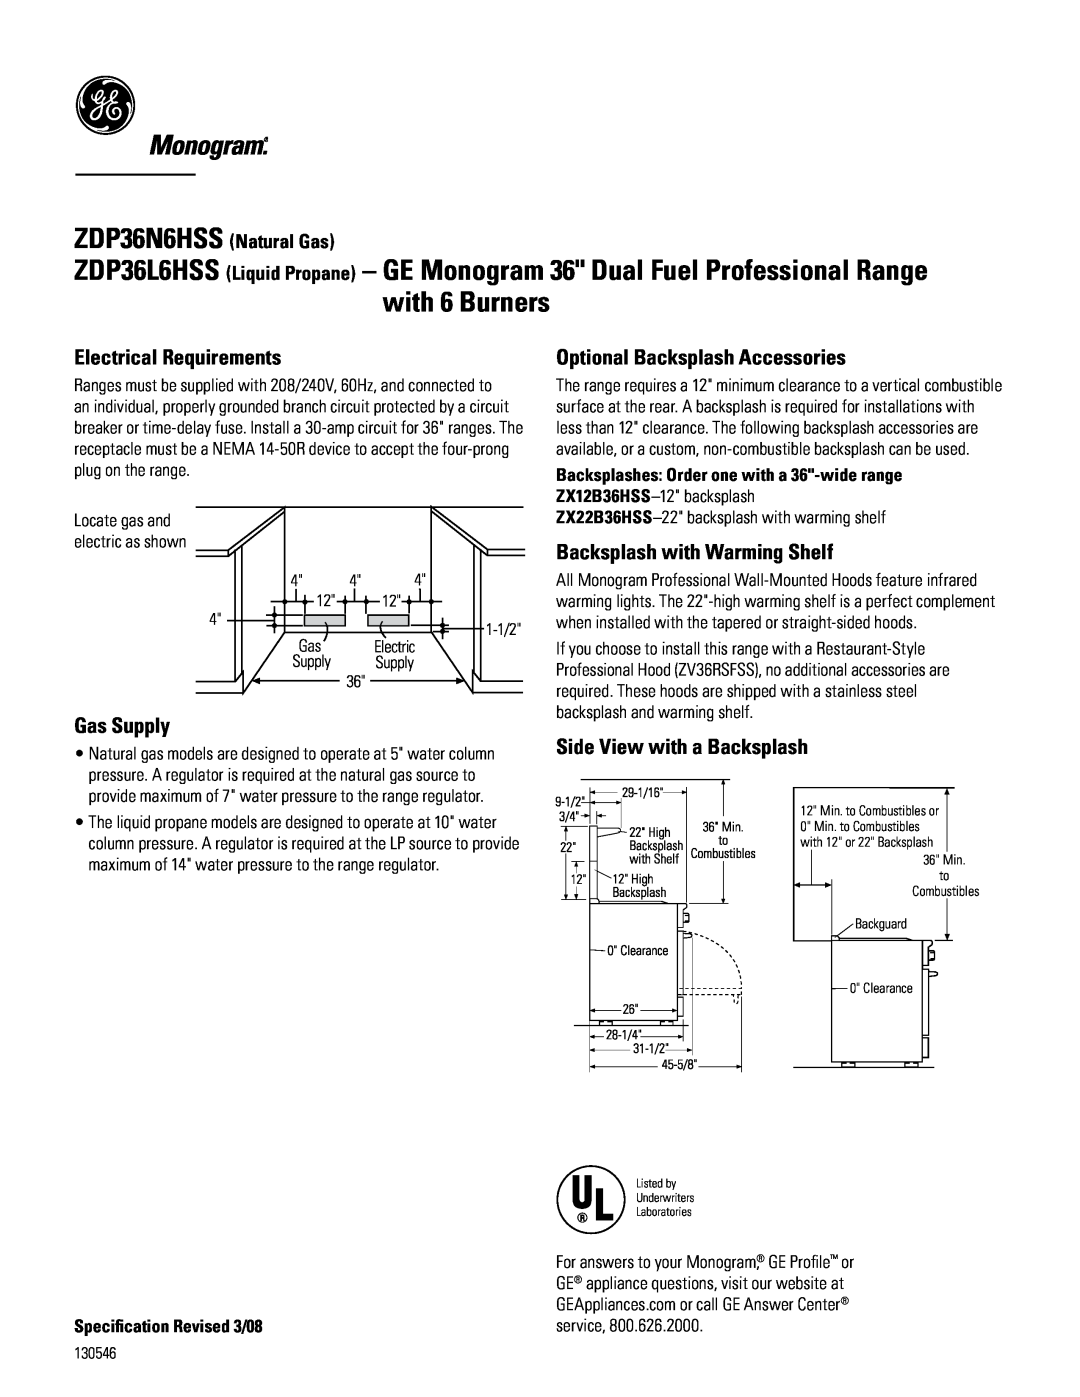 GE Monogram zDP36N6hSS Electrical Requirements, Gas Supply, Optional Backsplash Accessories, Backsplash with Warming Shelf 